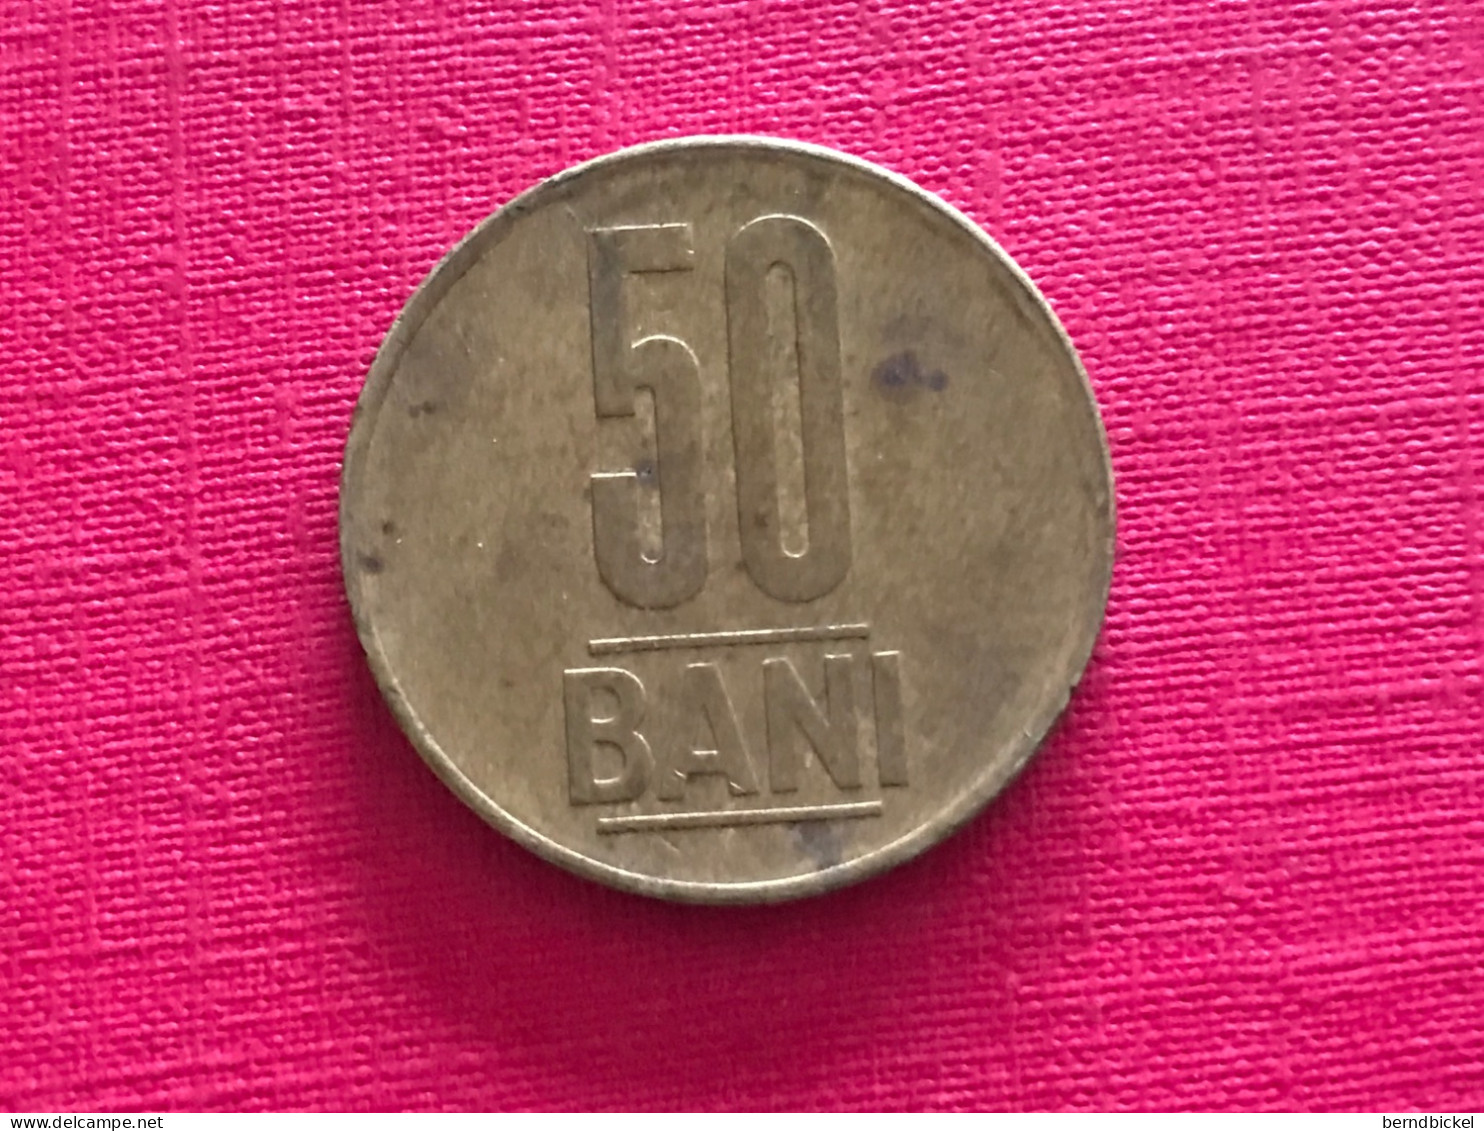 Münze Münzen Umlaufmünze Rumänien 50 Bani 2017 - Romania